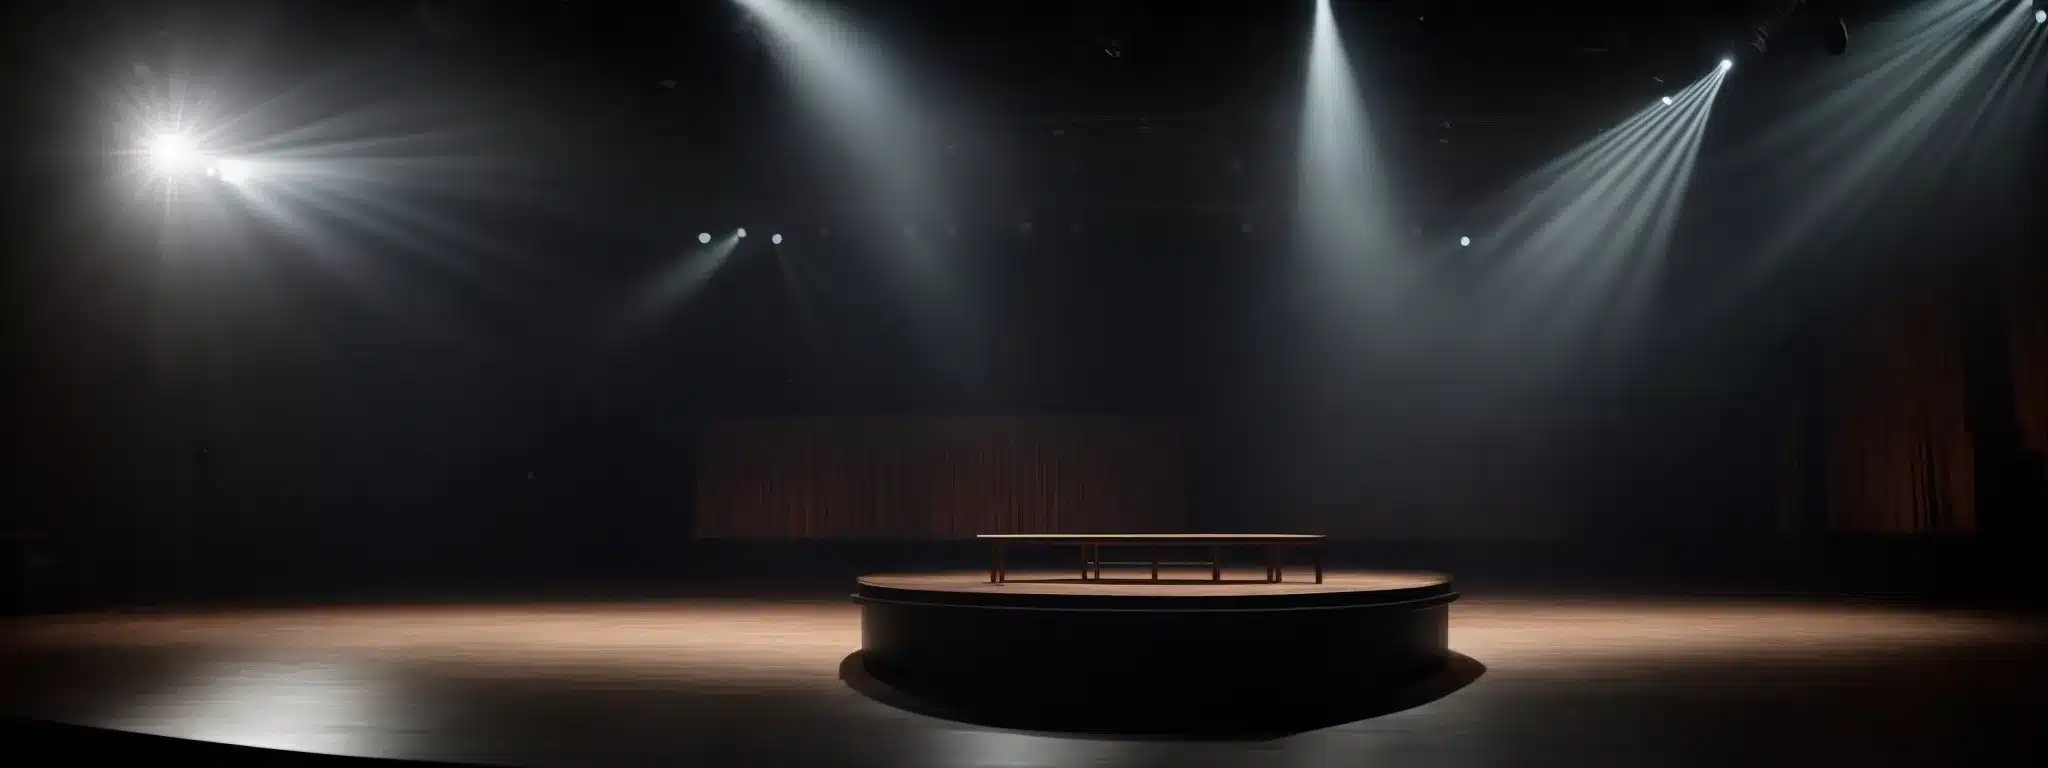 A Lone Spotlight Illuminates An Empty Stage Set For An Innovative Performance.